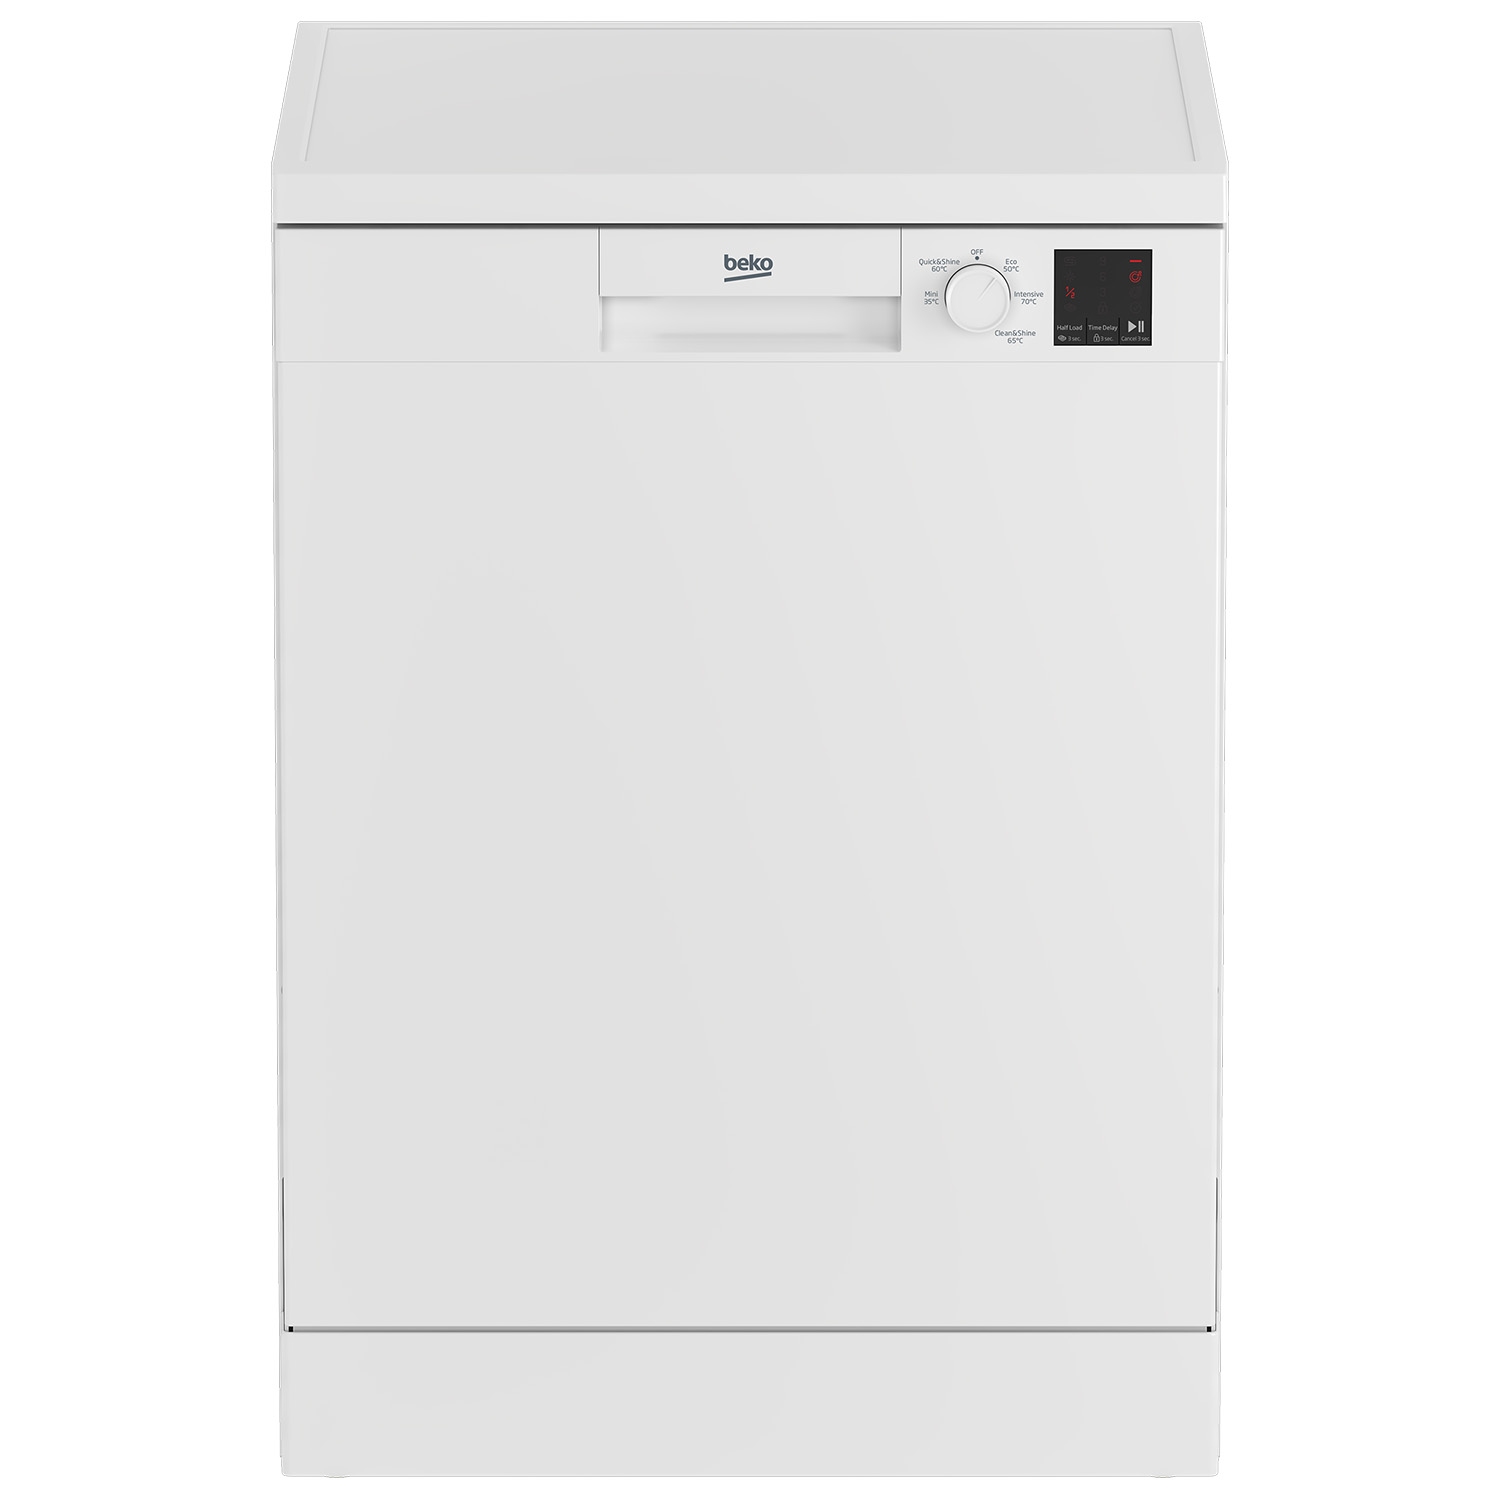 Beko DVN05C20W Full Size Dishwasher - White - 13 Place Settings - 0